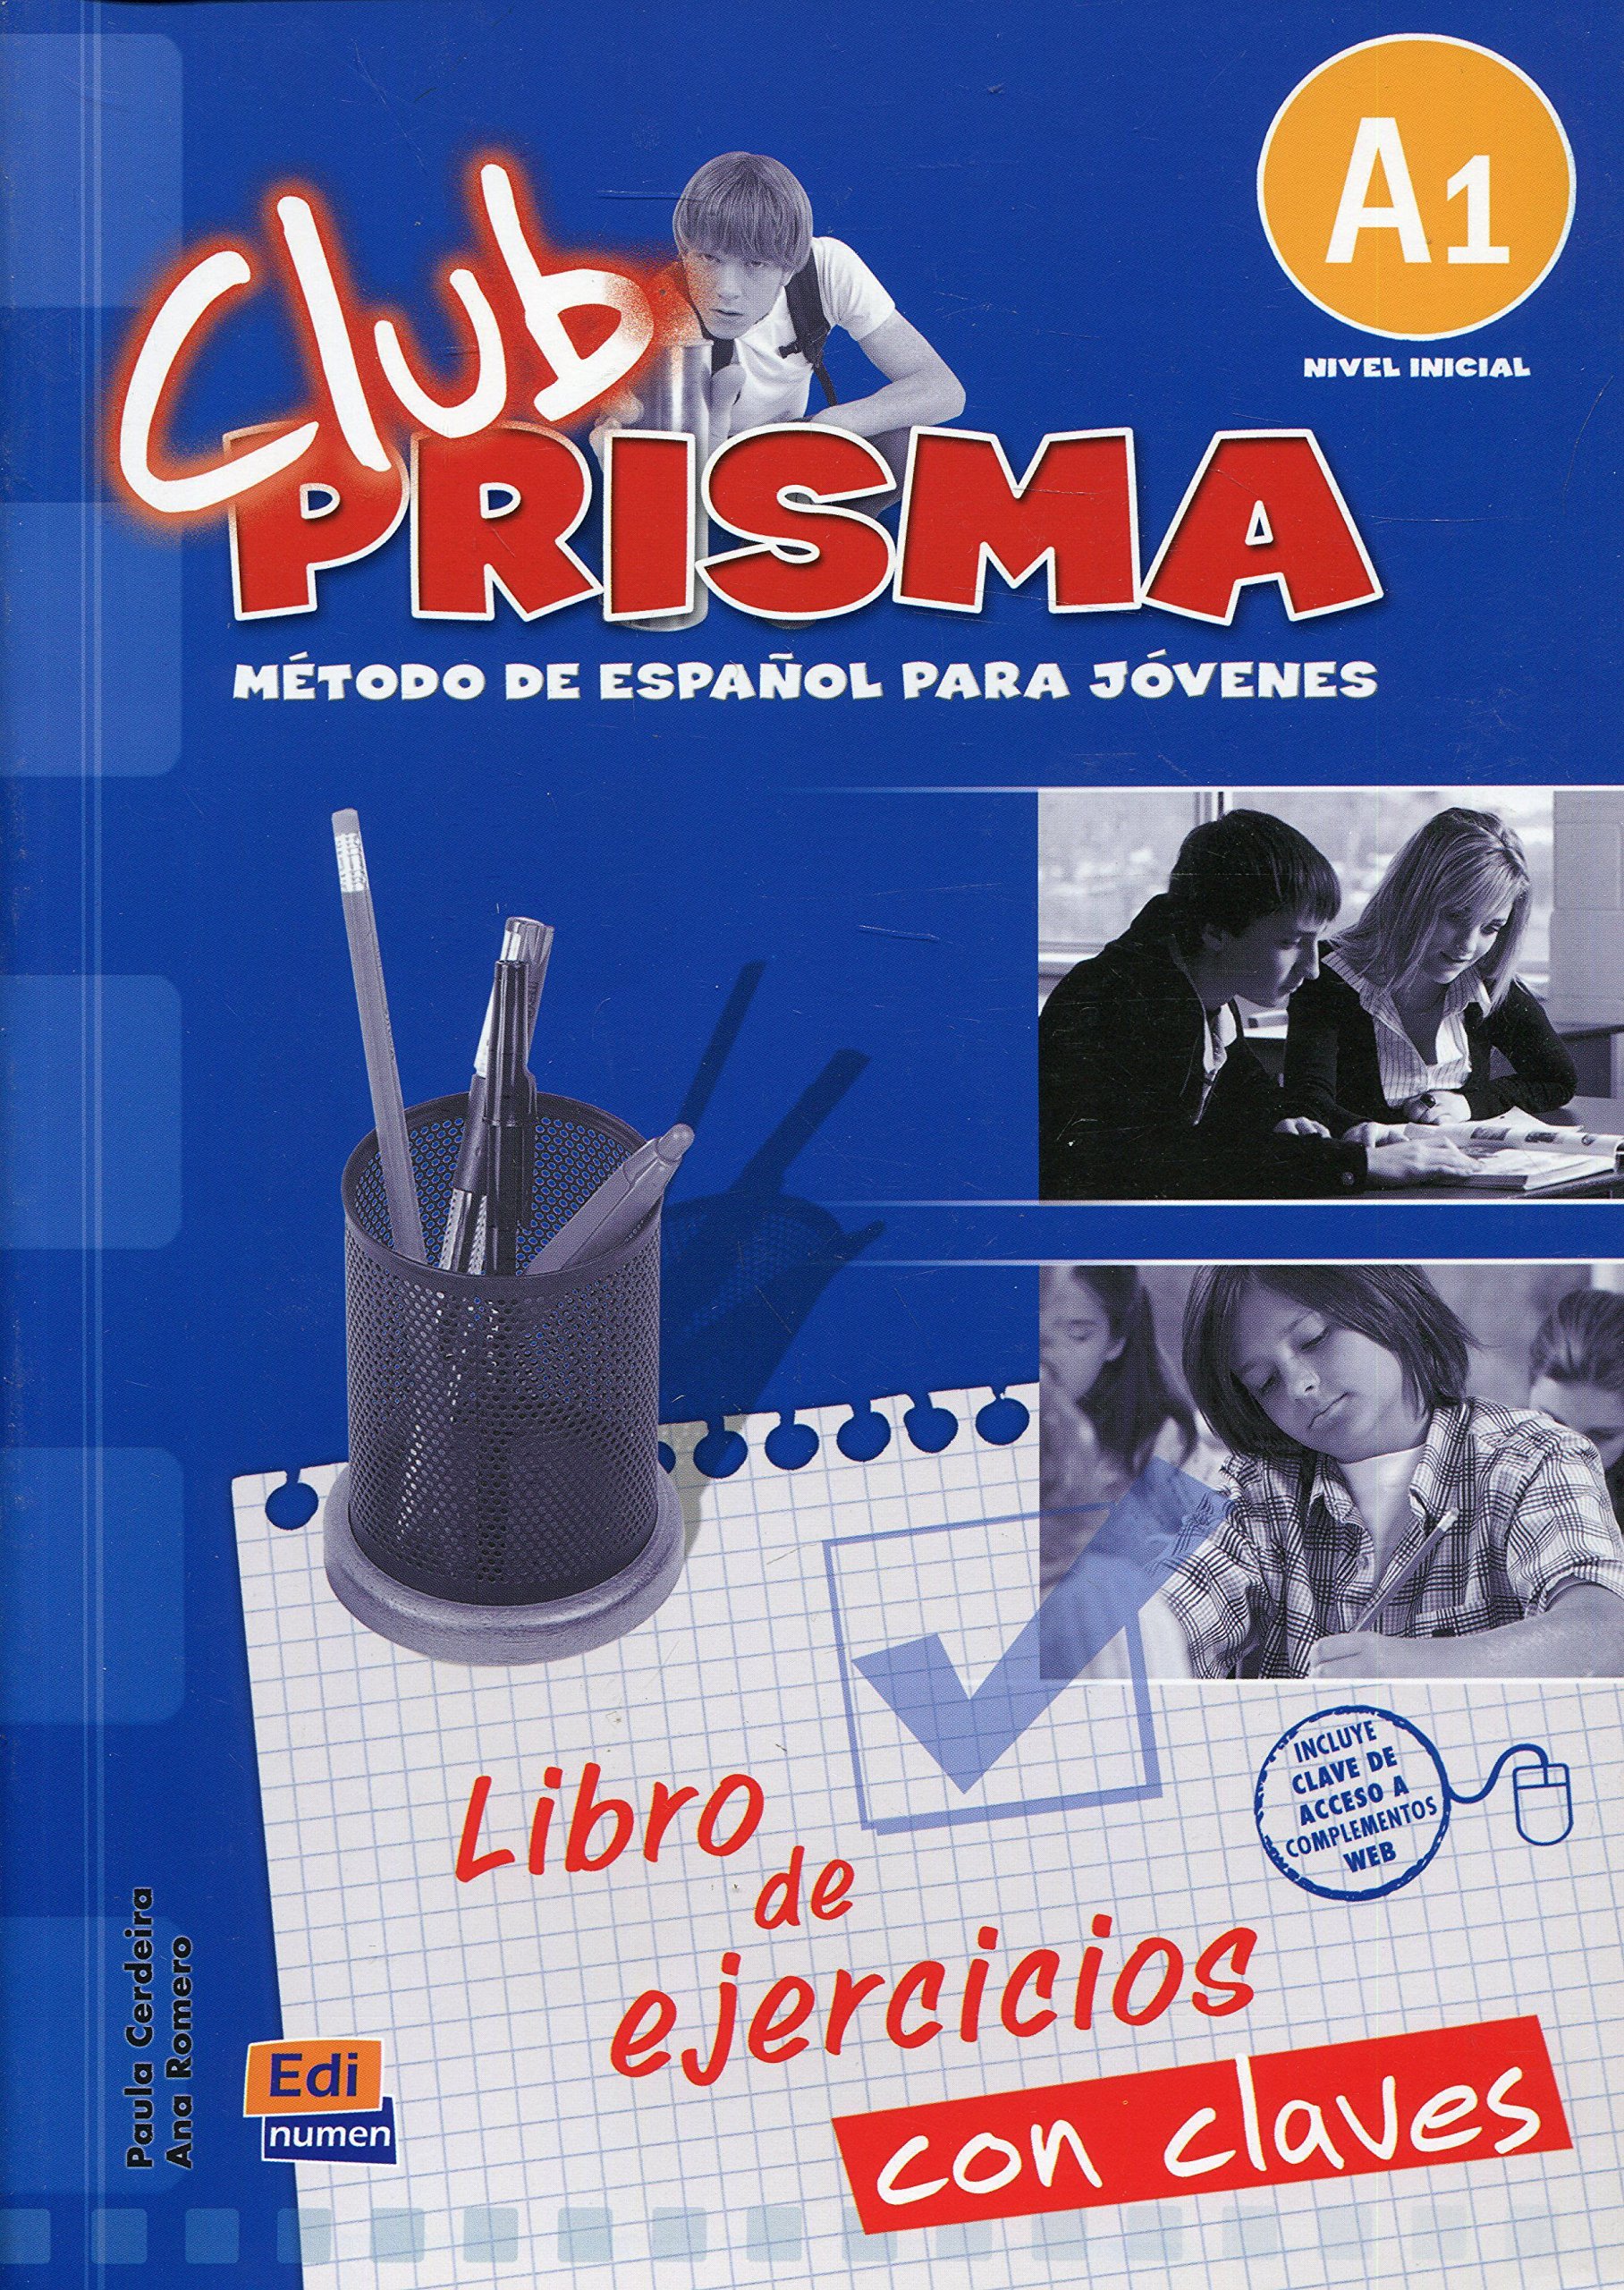 Координатор проекта: Maria Jose Gelabert Club Prisma Nivel A1 - Libro de ejercicios con claves 